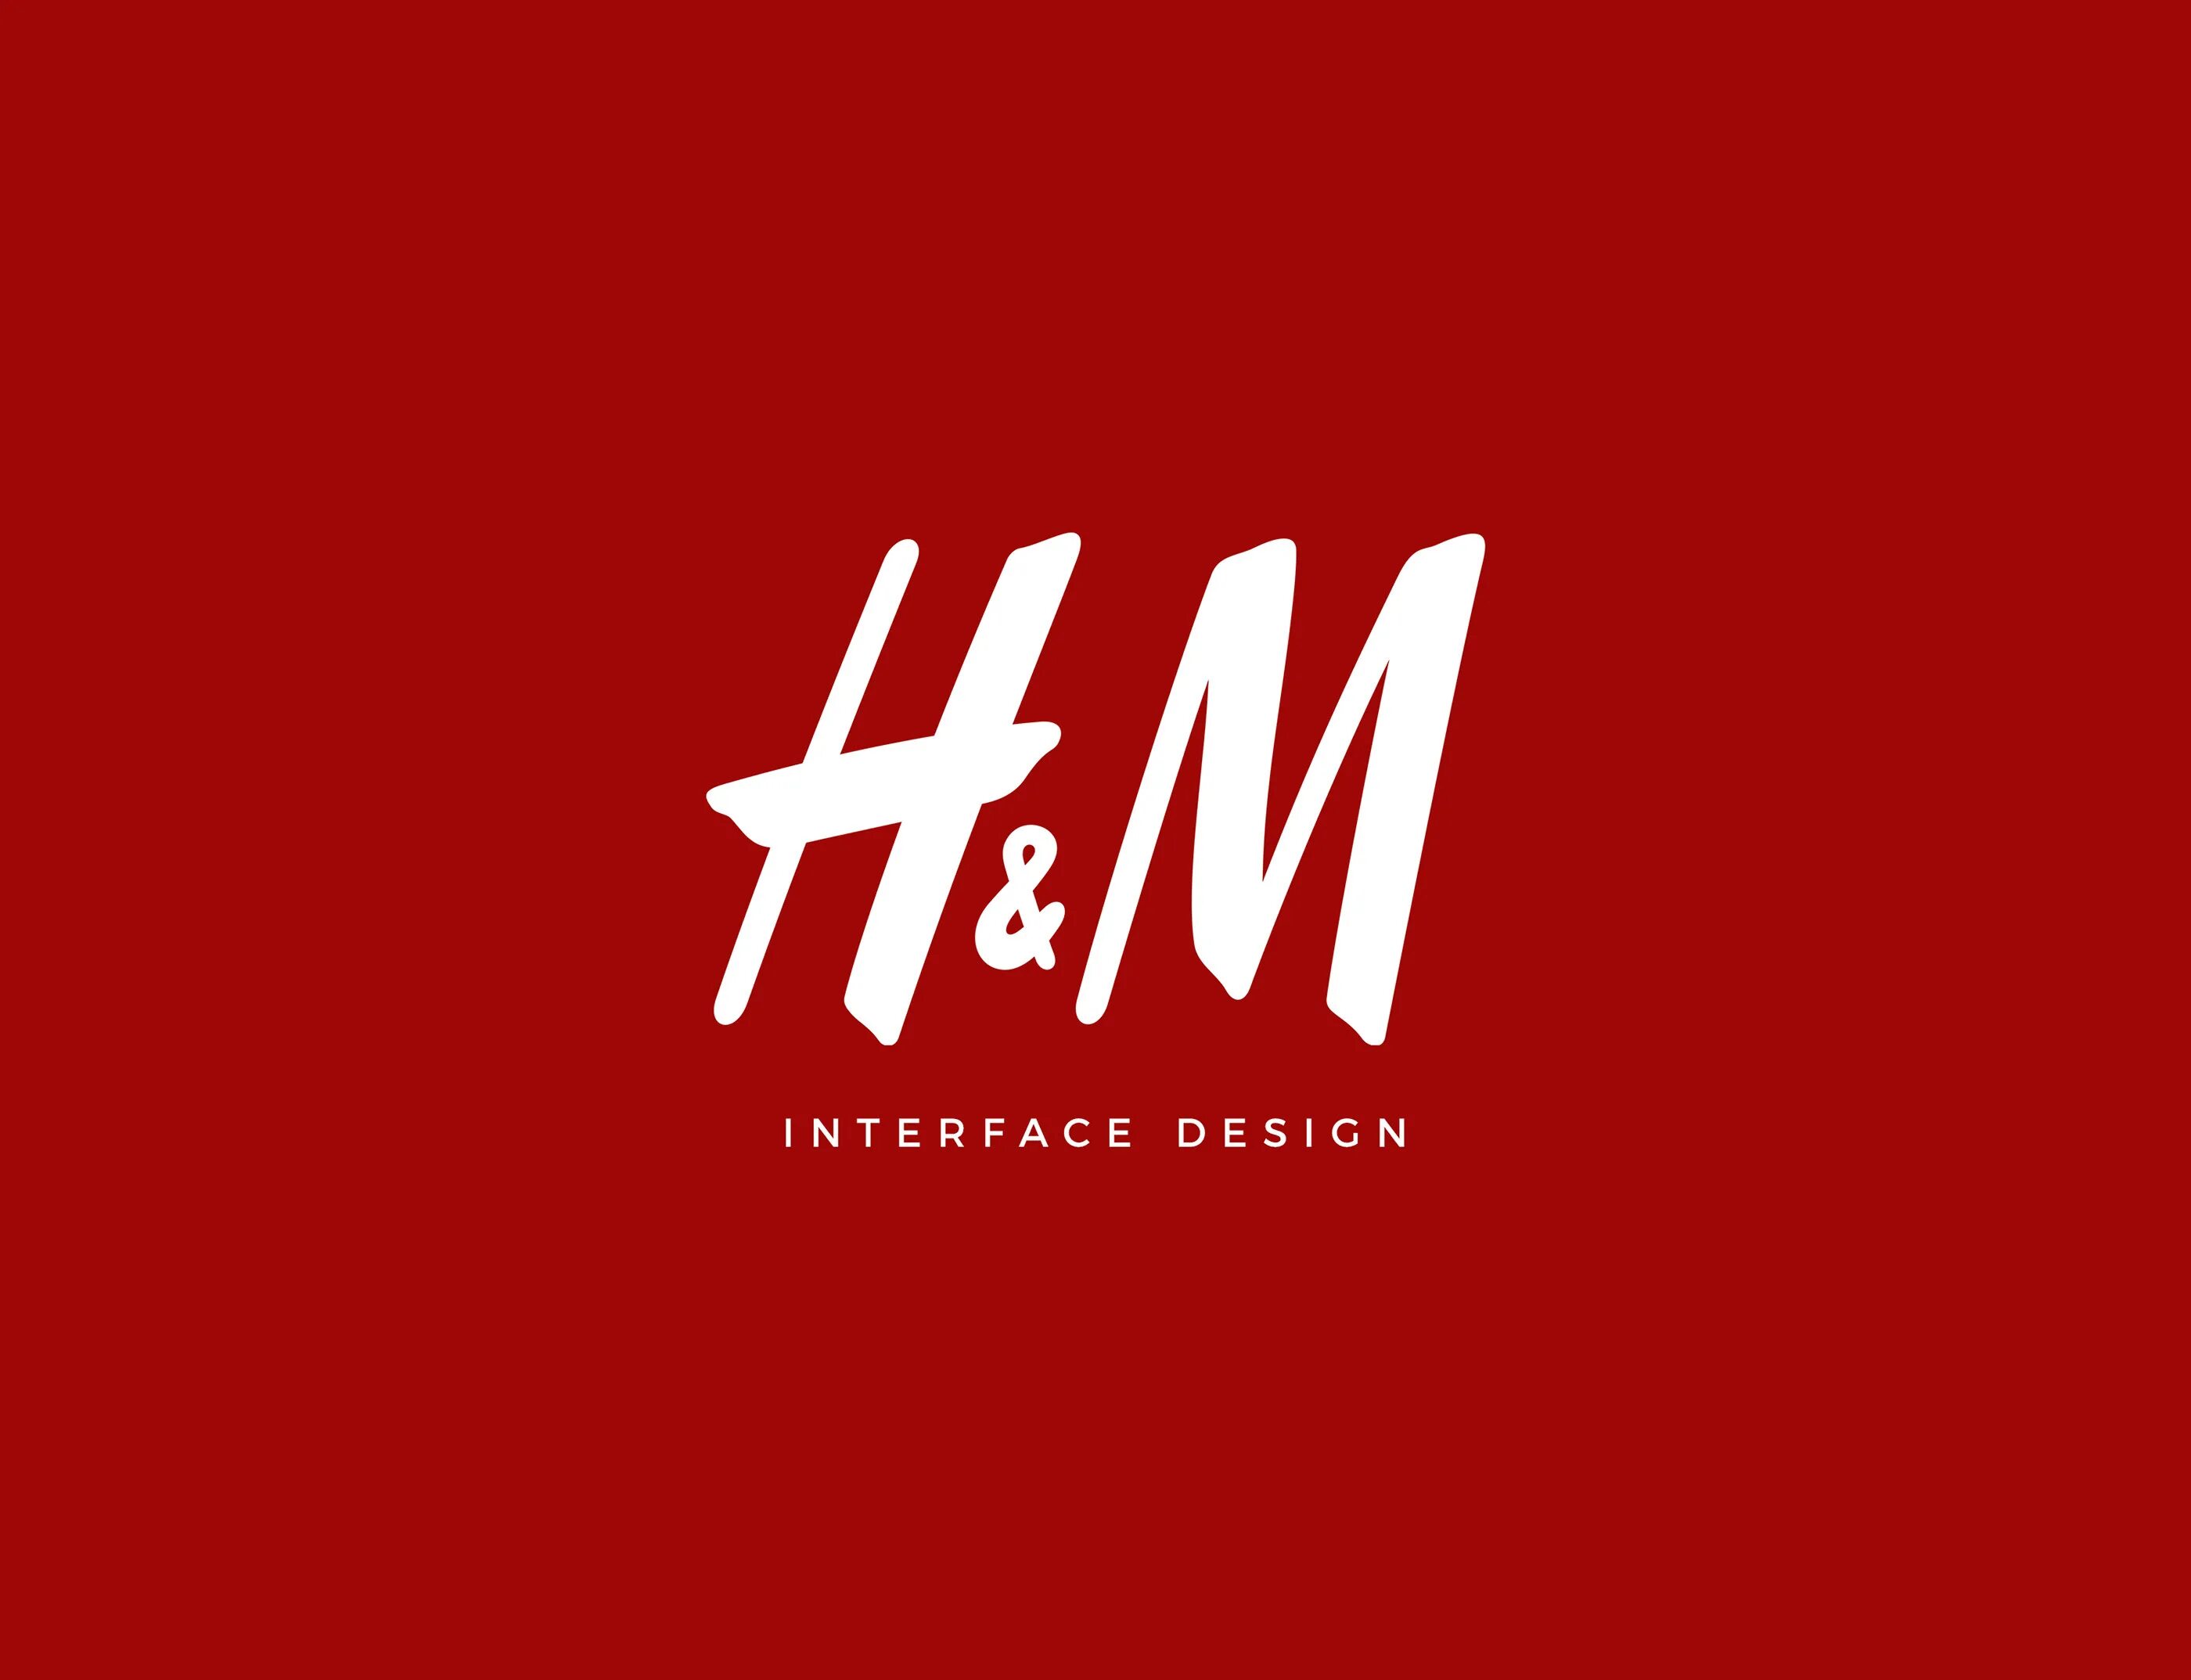 H m he. НМ логотип. Бренд h m. Компания h m логотип. Логотип магазина одежды h&m.